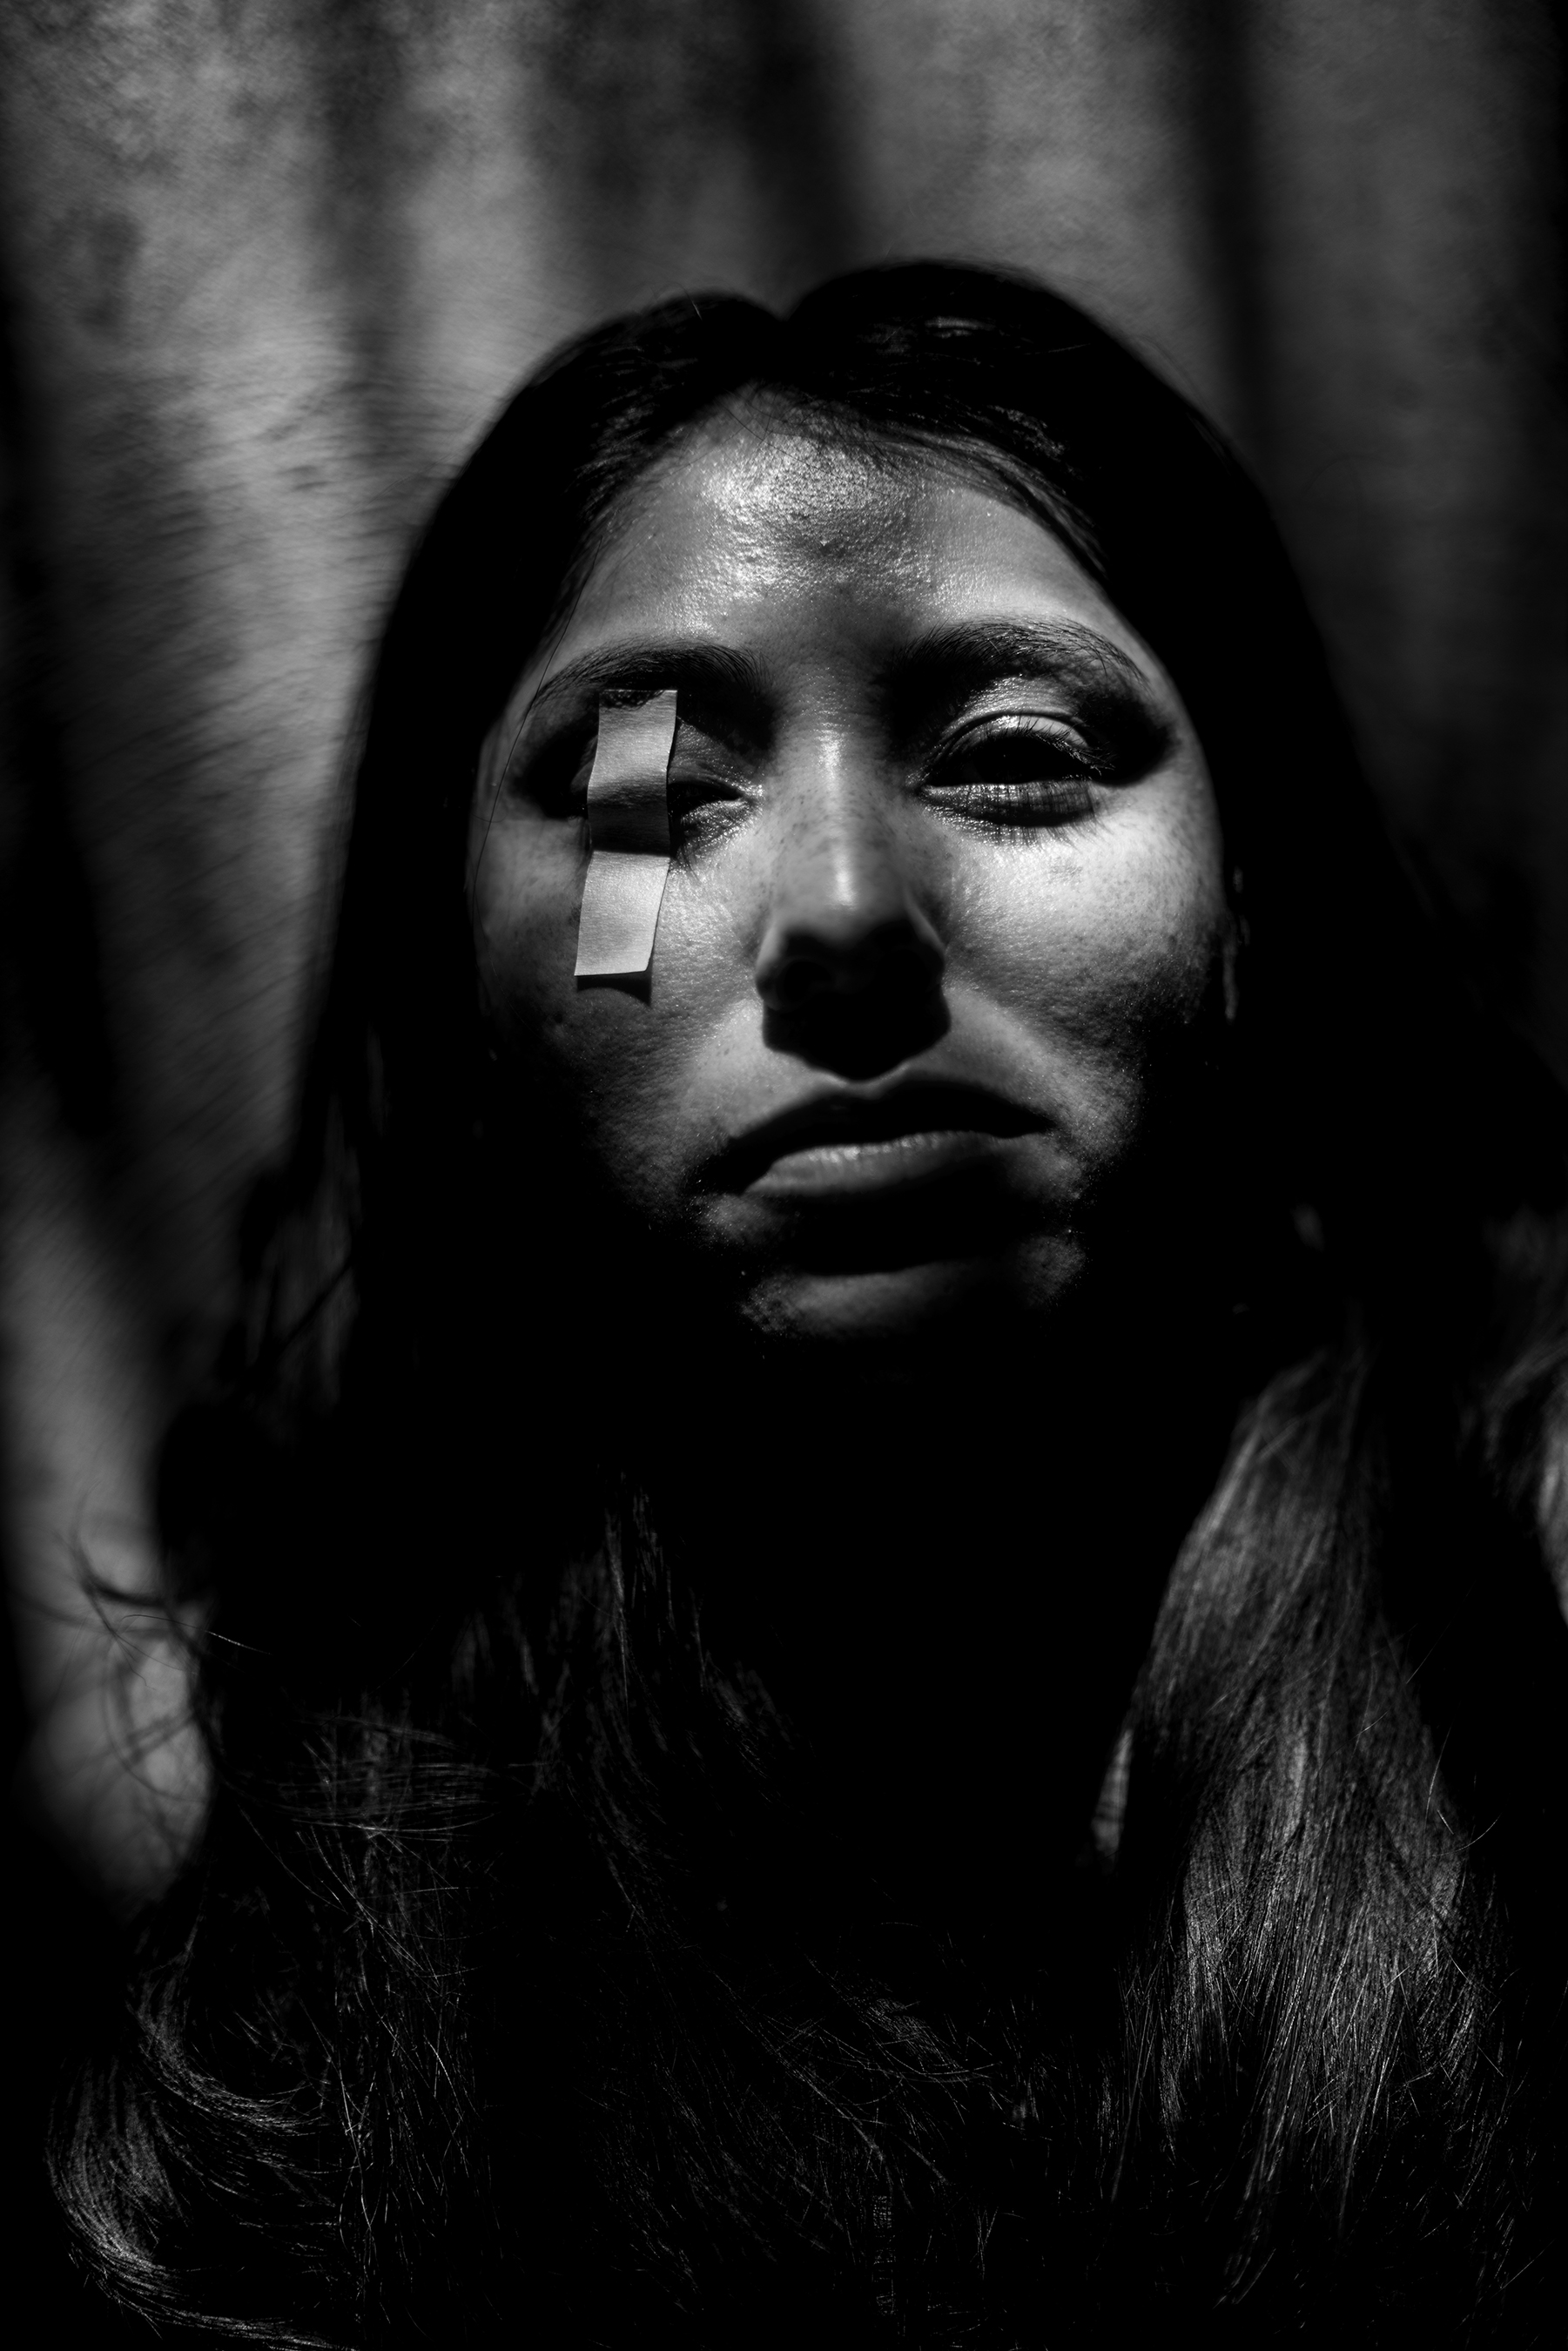  Dead Ringer/Self Portrait as Found Photograph (1979 Lima, Peru) 2018 